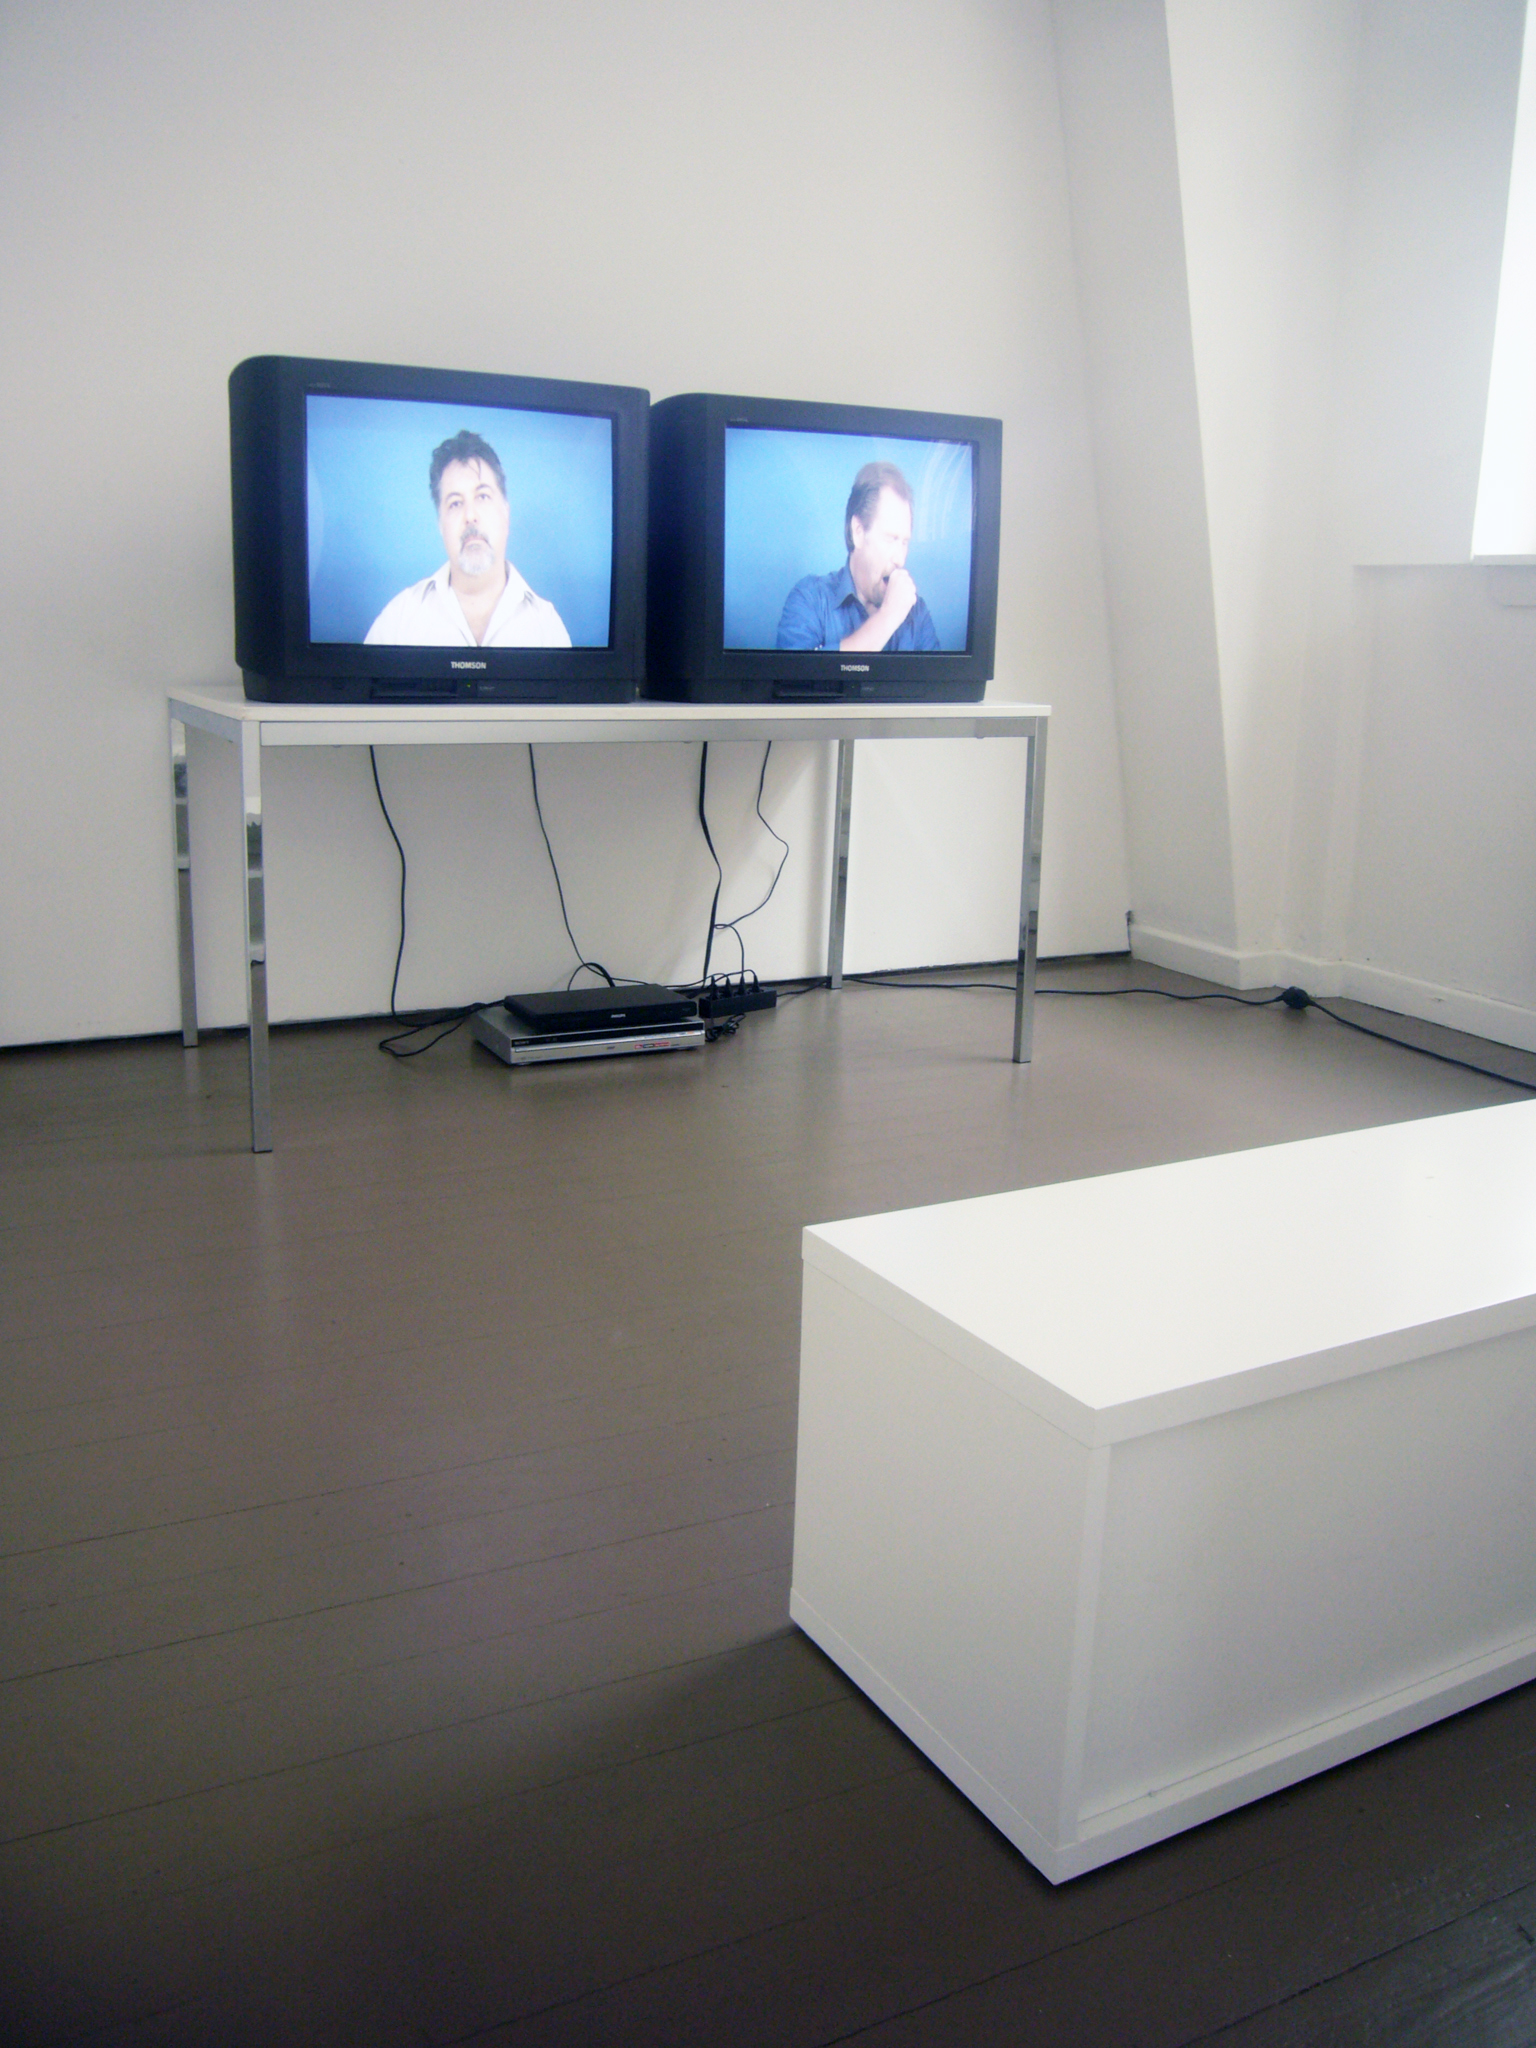  Julien Bismuth: “Titled (Untitled)”, 2009, Exhibition views Galerie Parisa Kind, Frankfurt am Main 